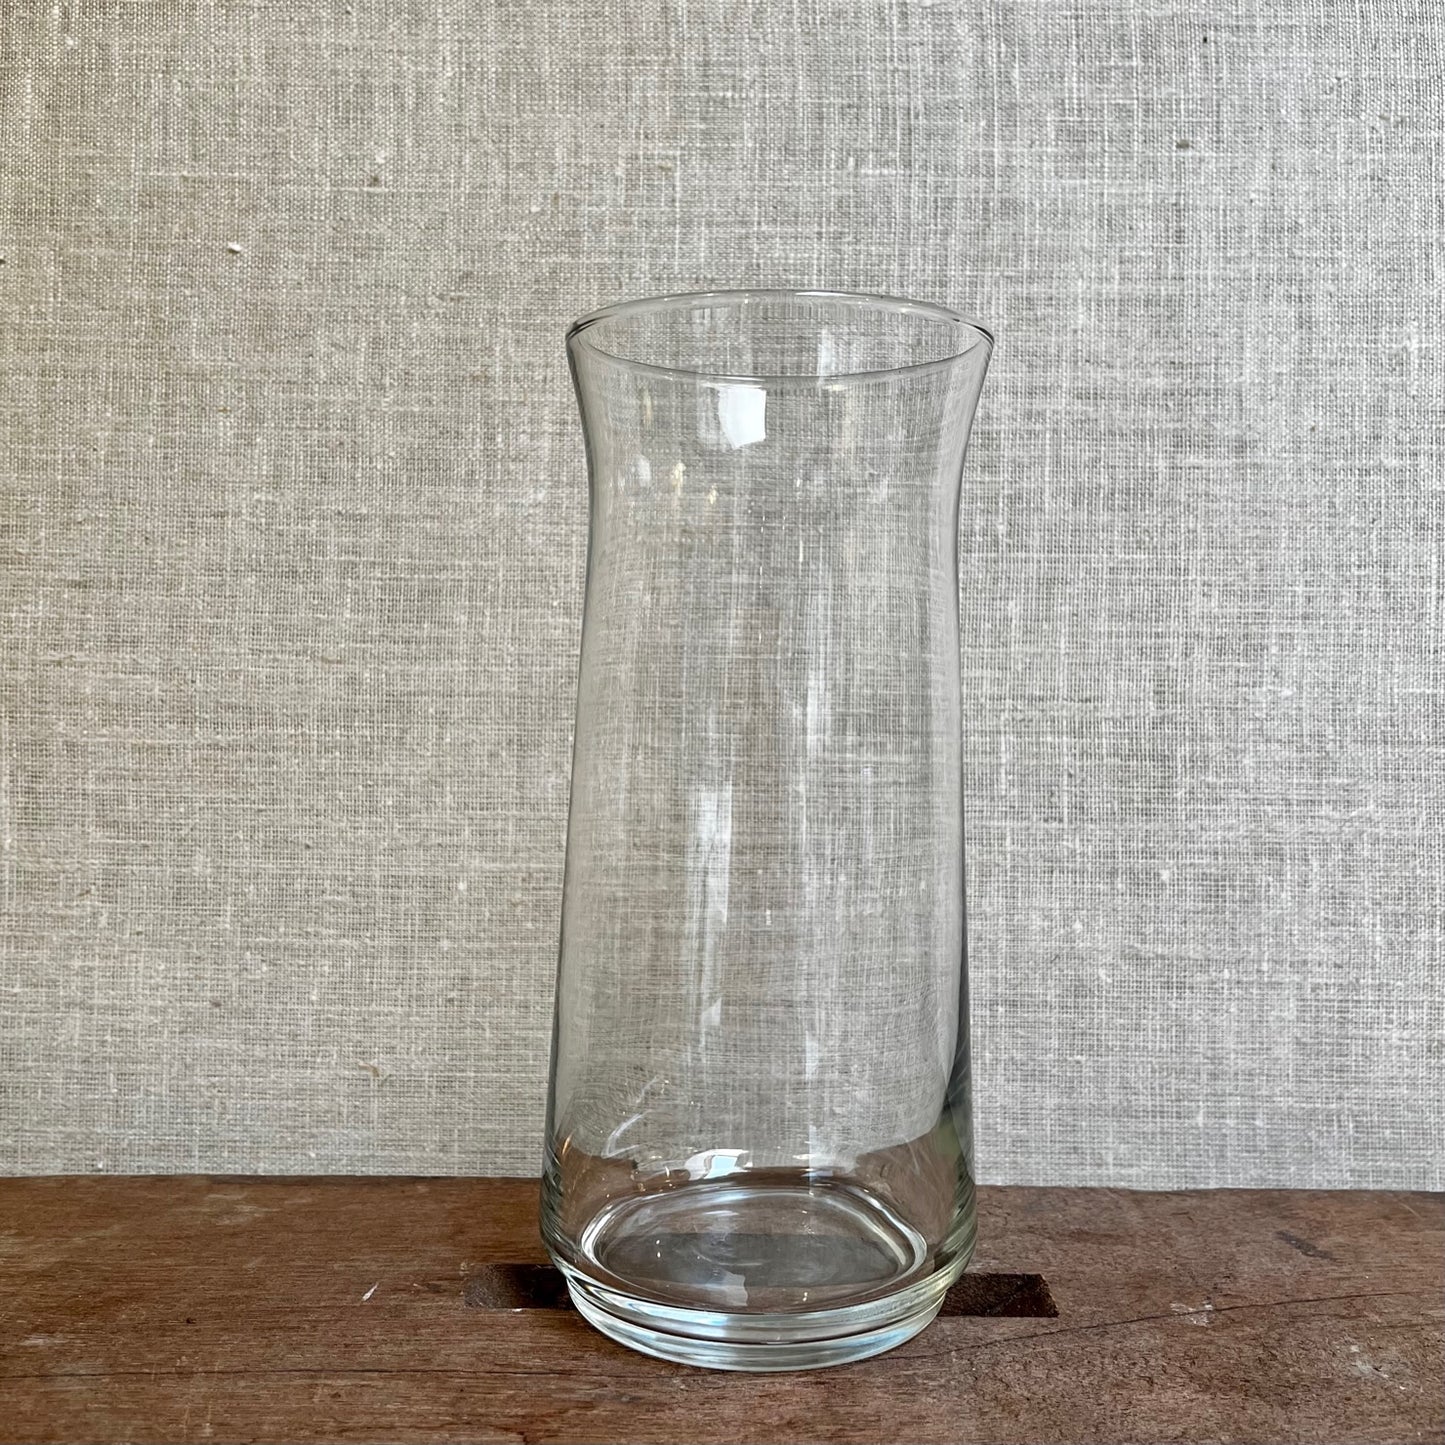 Add: Glass Vase